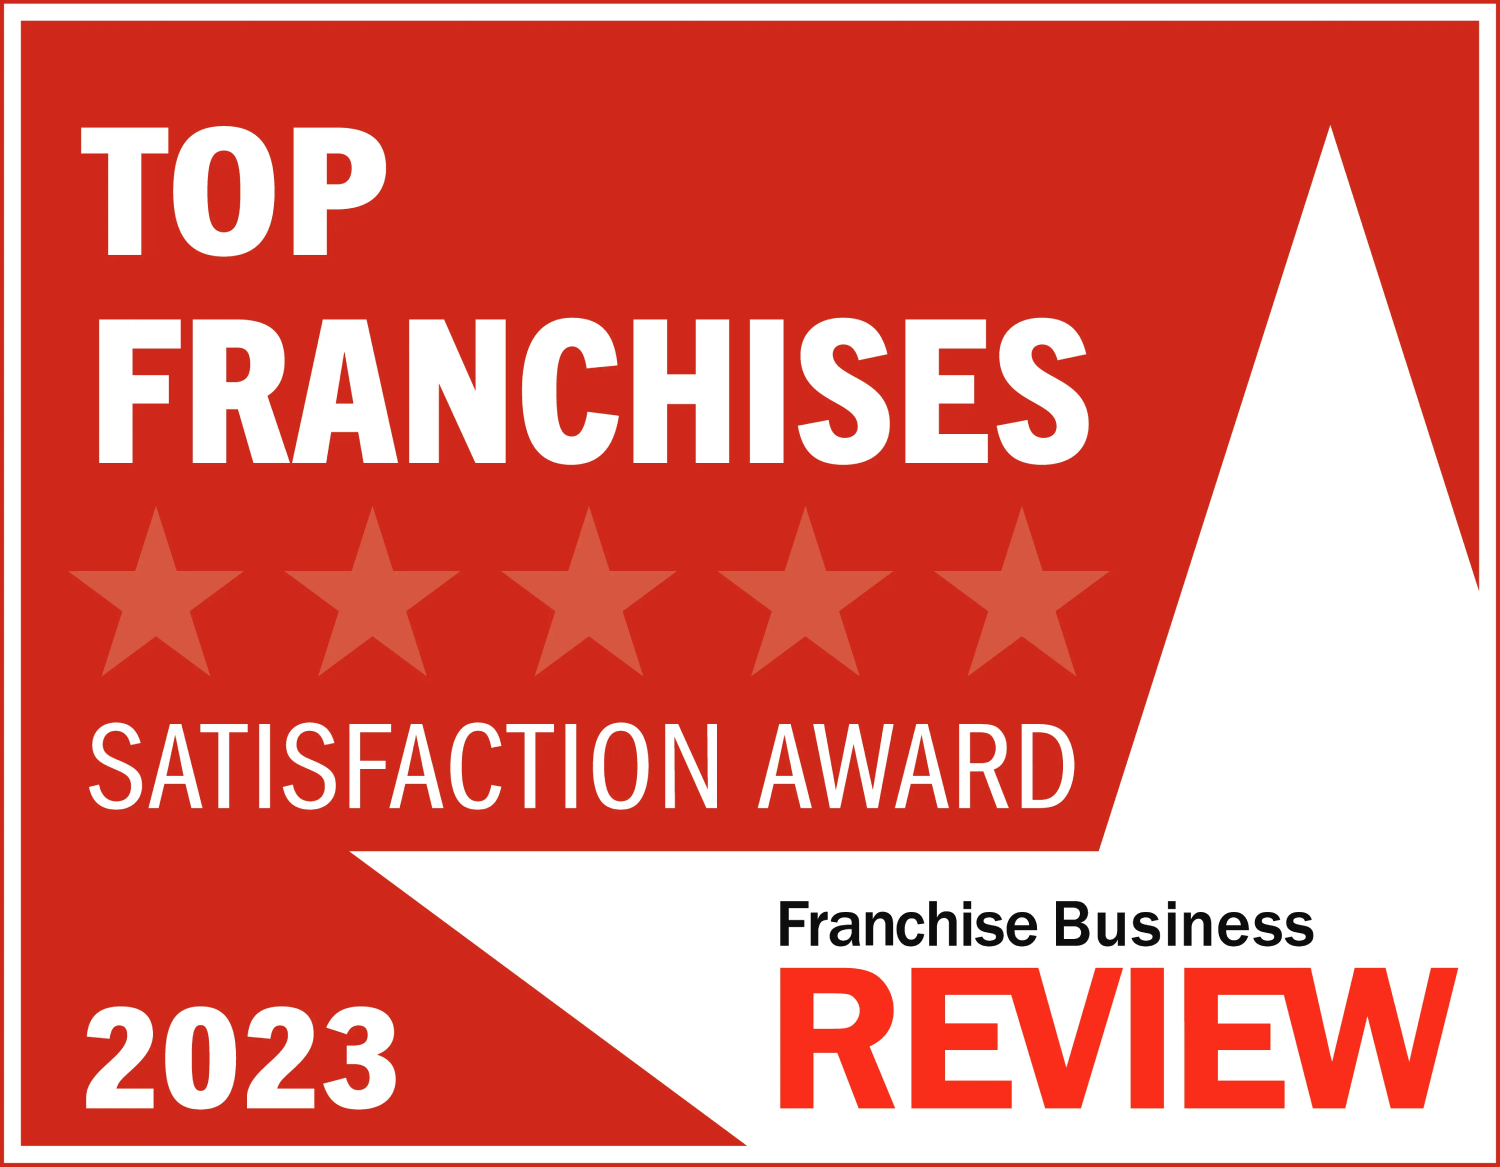 Franchise Business Review Top Franchises 2023